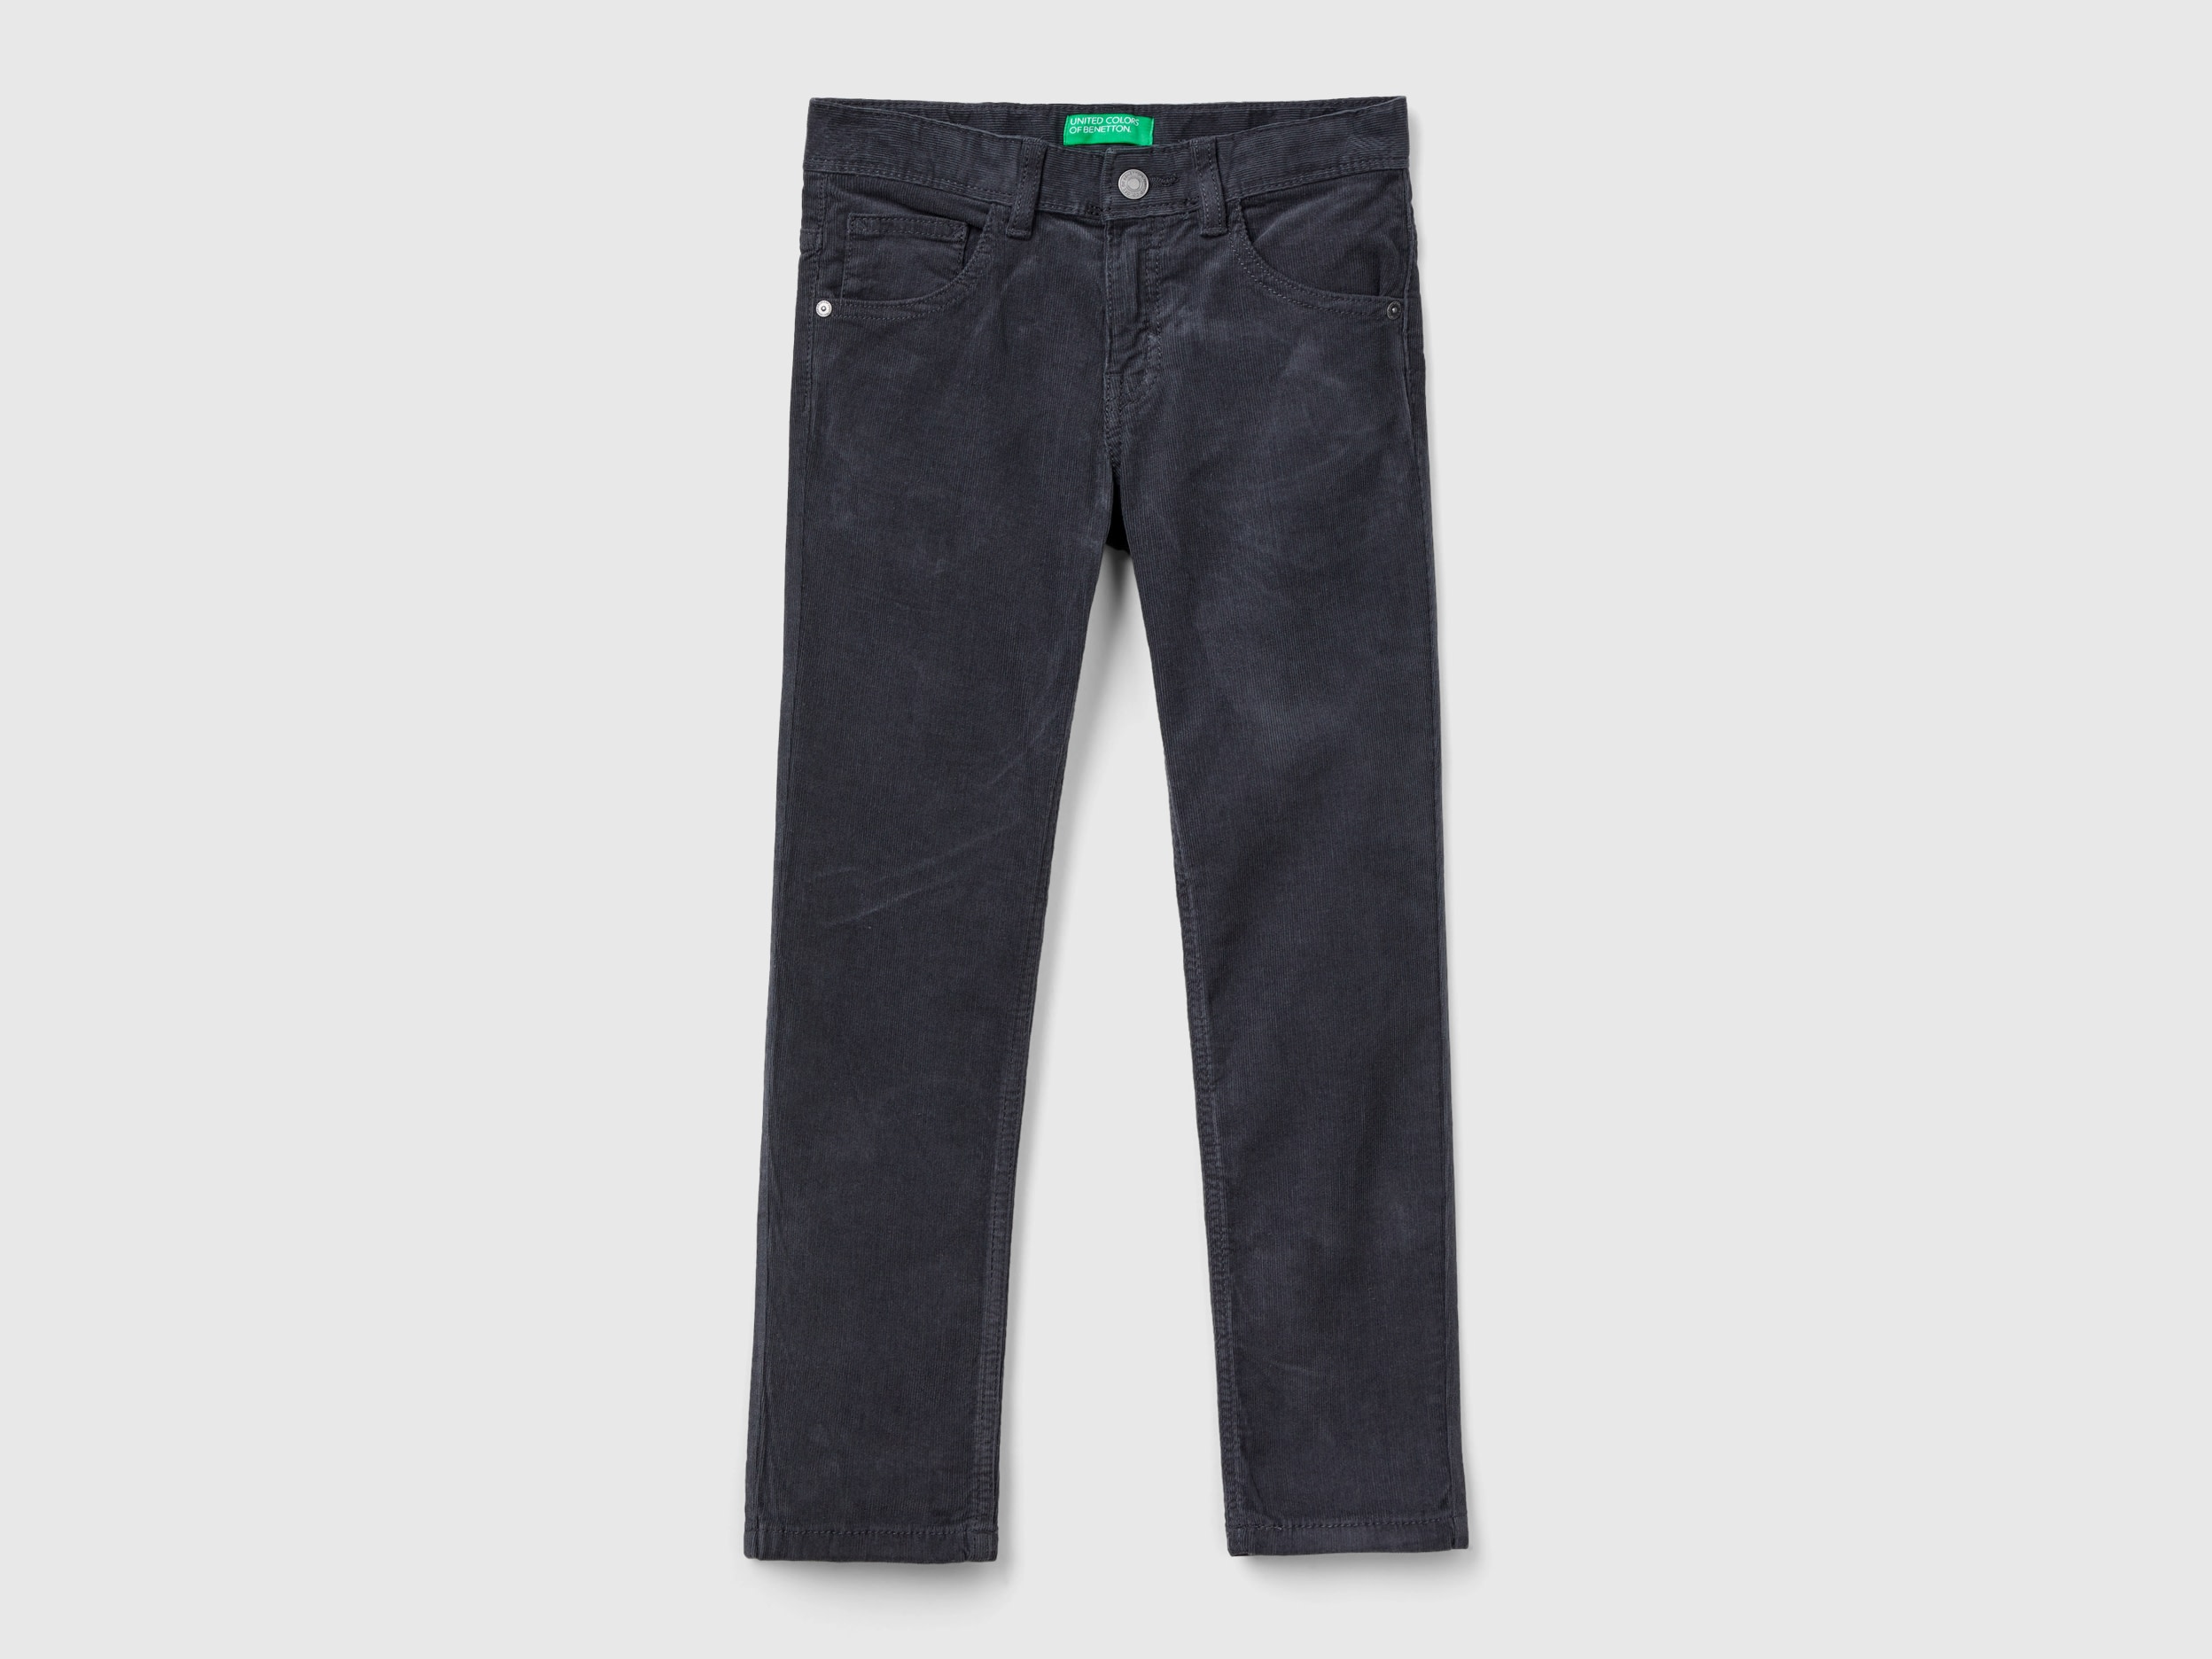 Benetton, Slim Fit Stretch Corduroy Trousers, size 2XL, Dark Gray, Kids